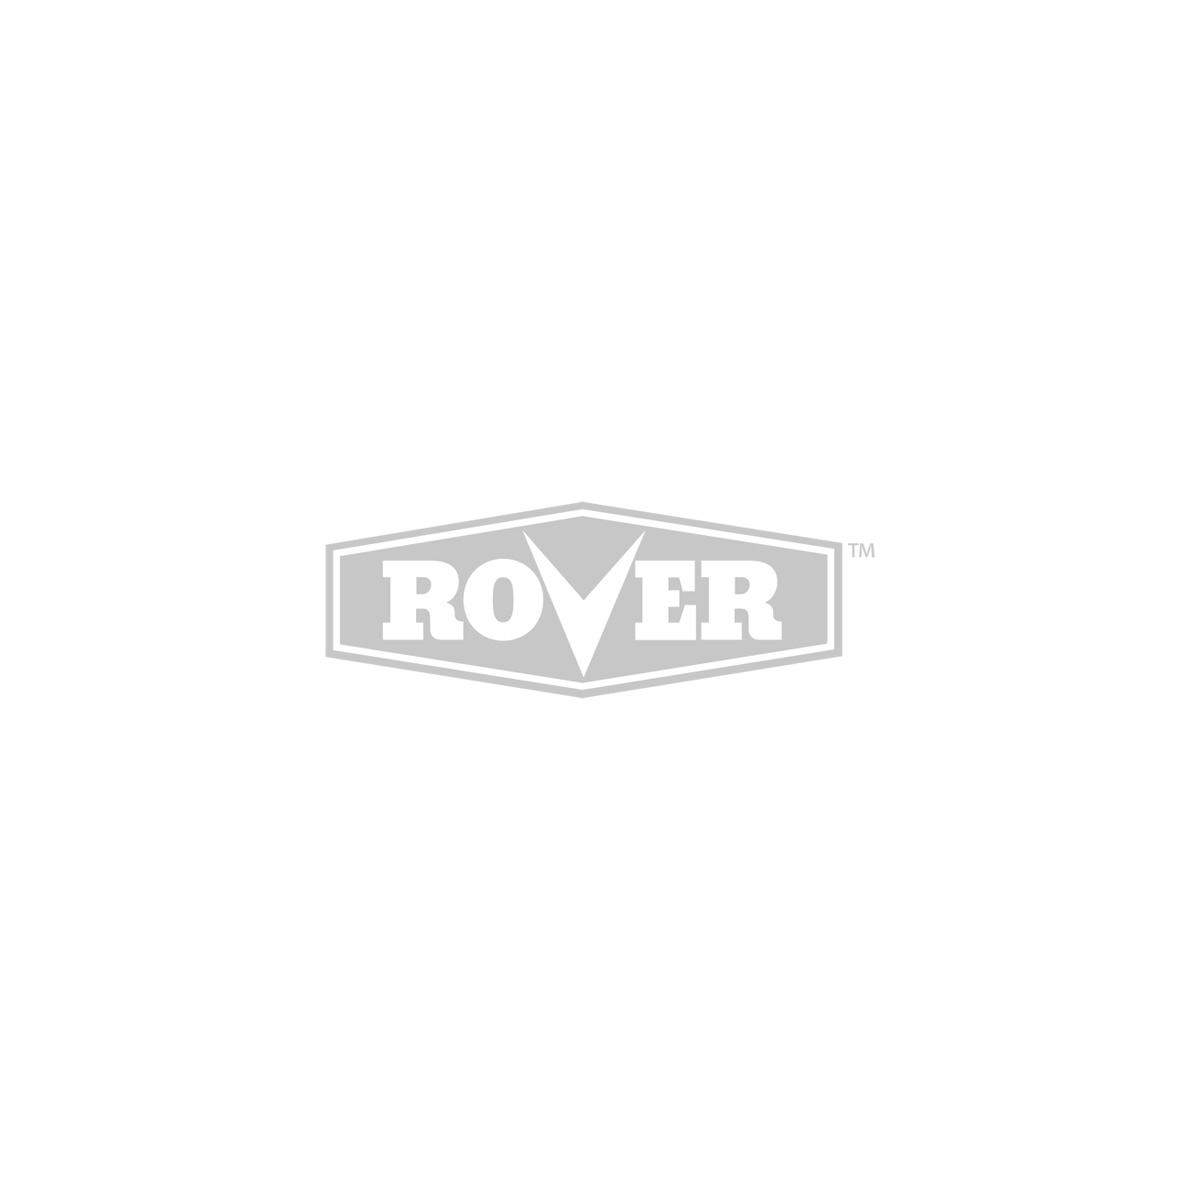 Rover 4cm (1.5